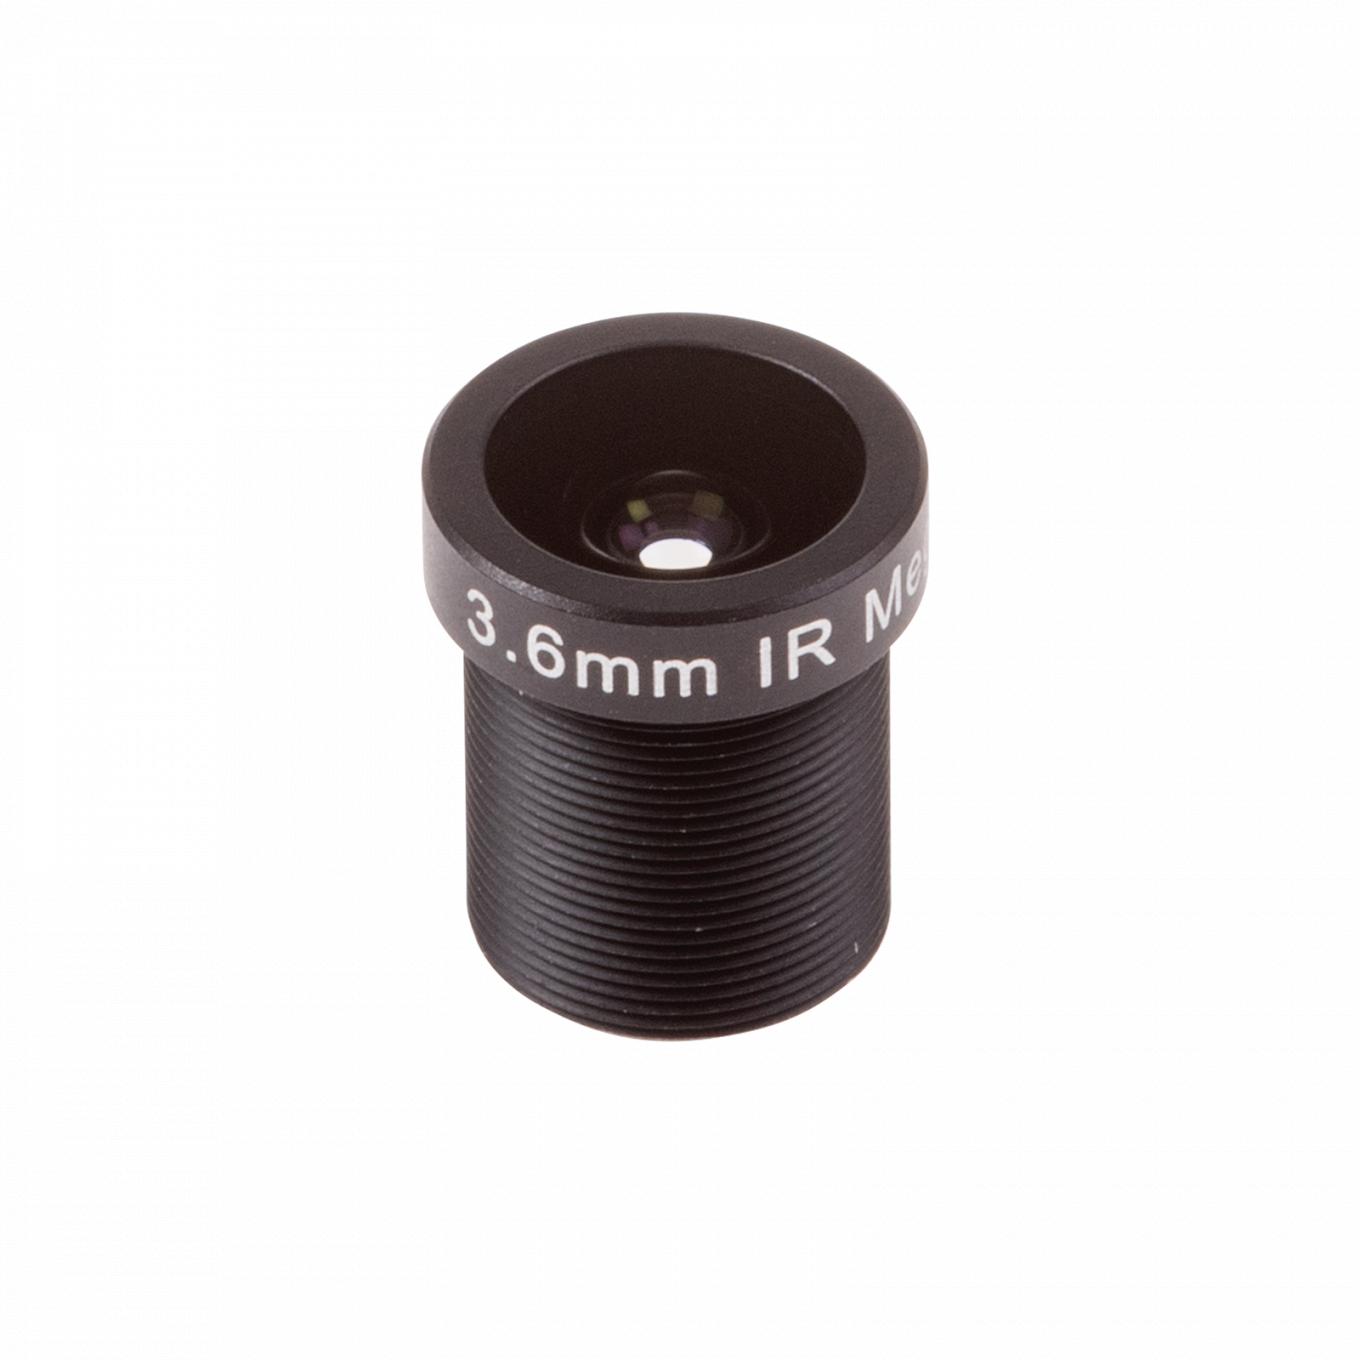 Объектив с ИК-подсветкой Lens M12 3.6 mm F1.8 IR, вид спереди